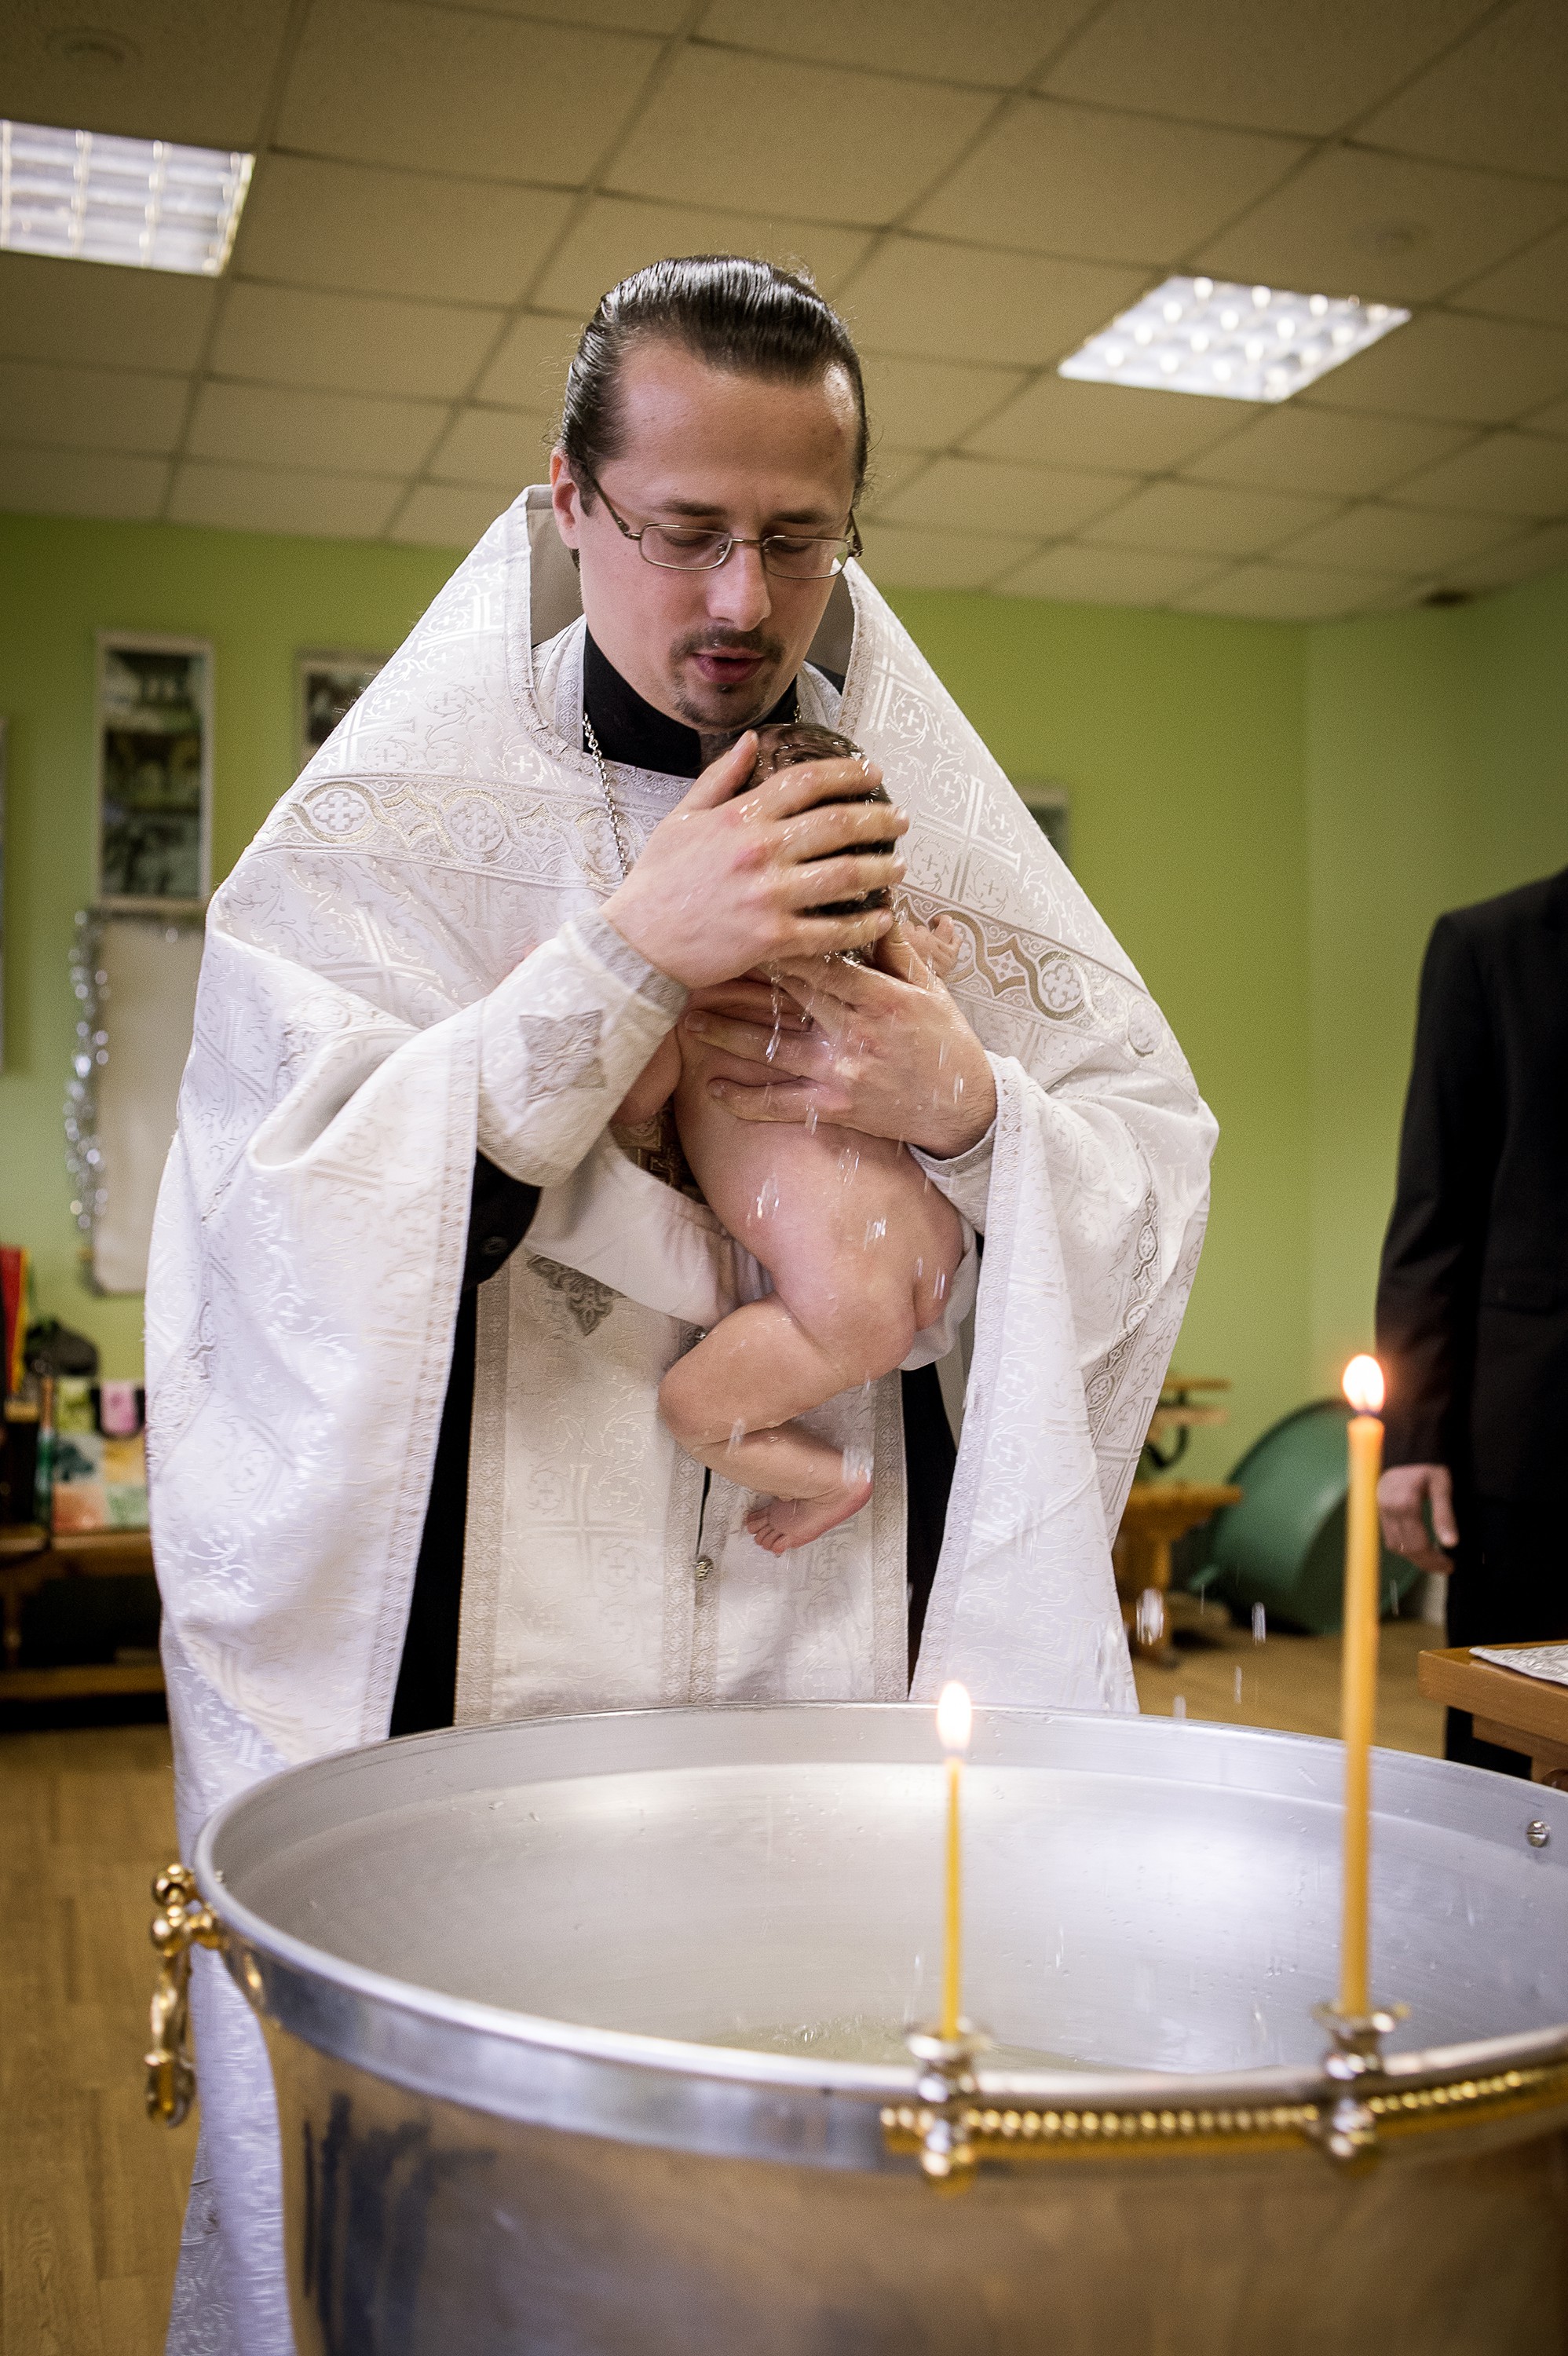 #infant baptism #крещение #фотосъемкакрещения